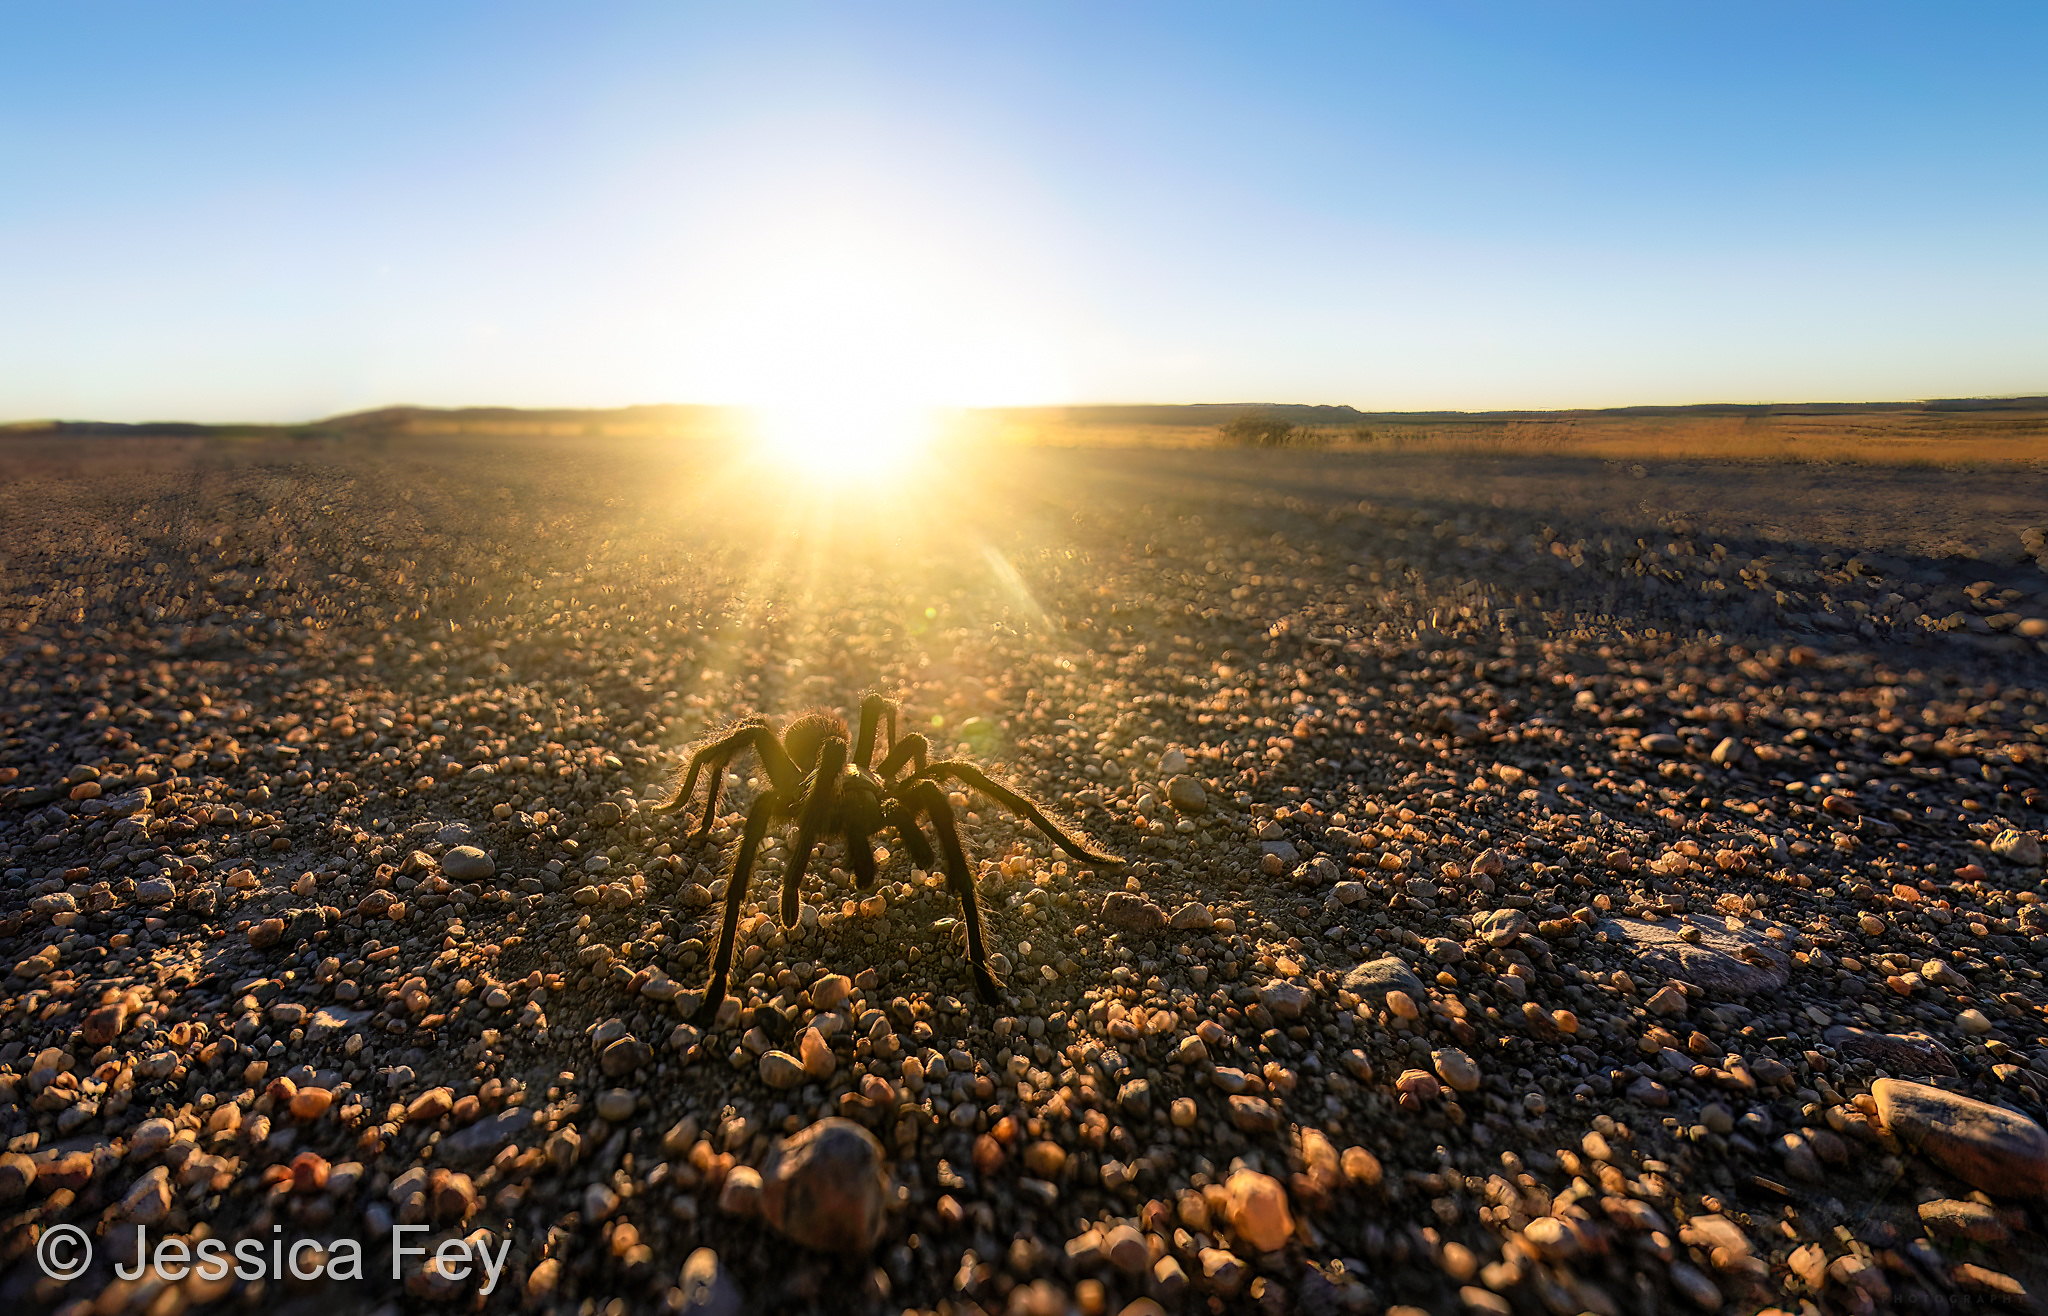 A tarantula on the move during the annual migration near La Junta, Colorado. (Jessica Fey)